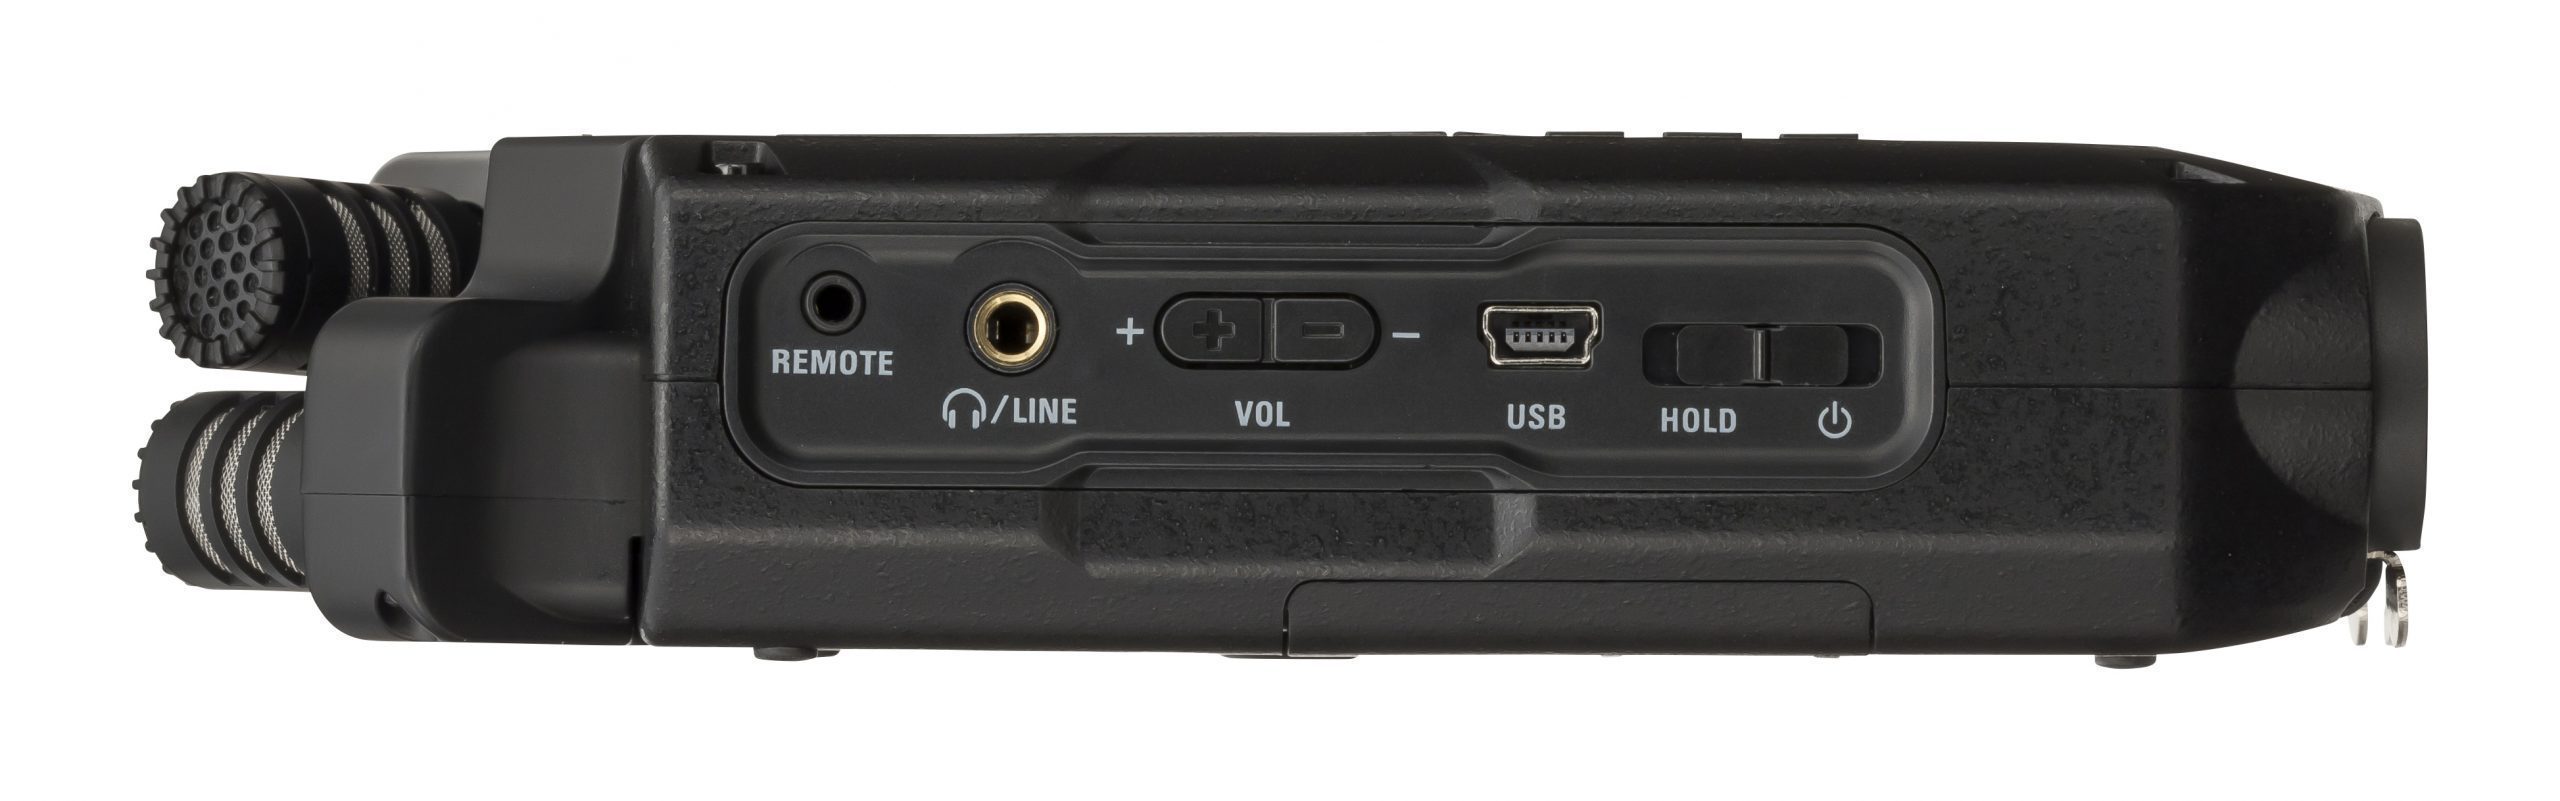 Zoom H4n Pro 4-Channel Handy Recorder (Black) - AV Store